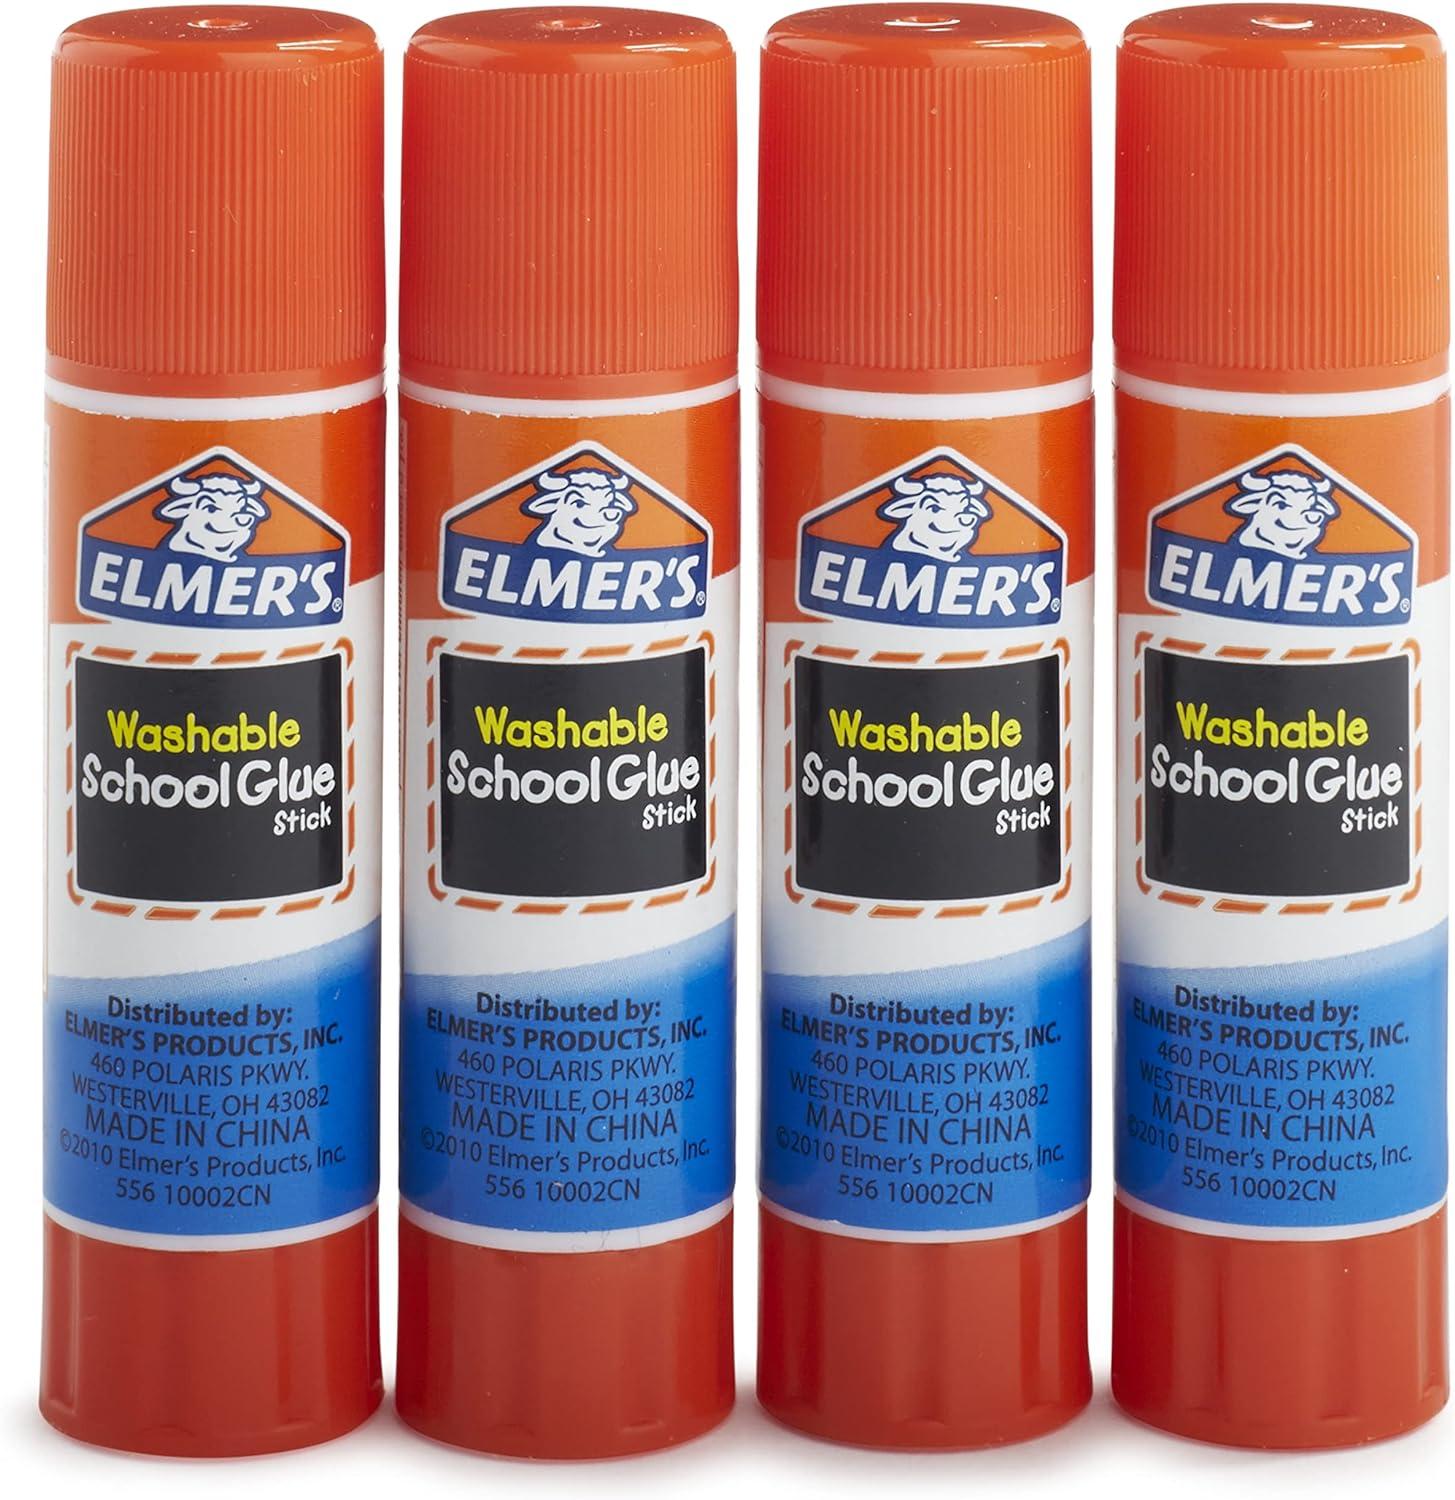 Elmer's Glue-All Multi-Purpose Glue - 4 oz tube